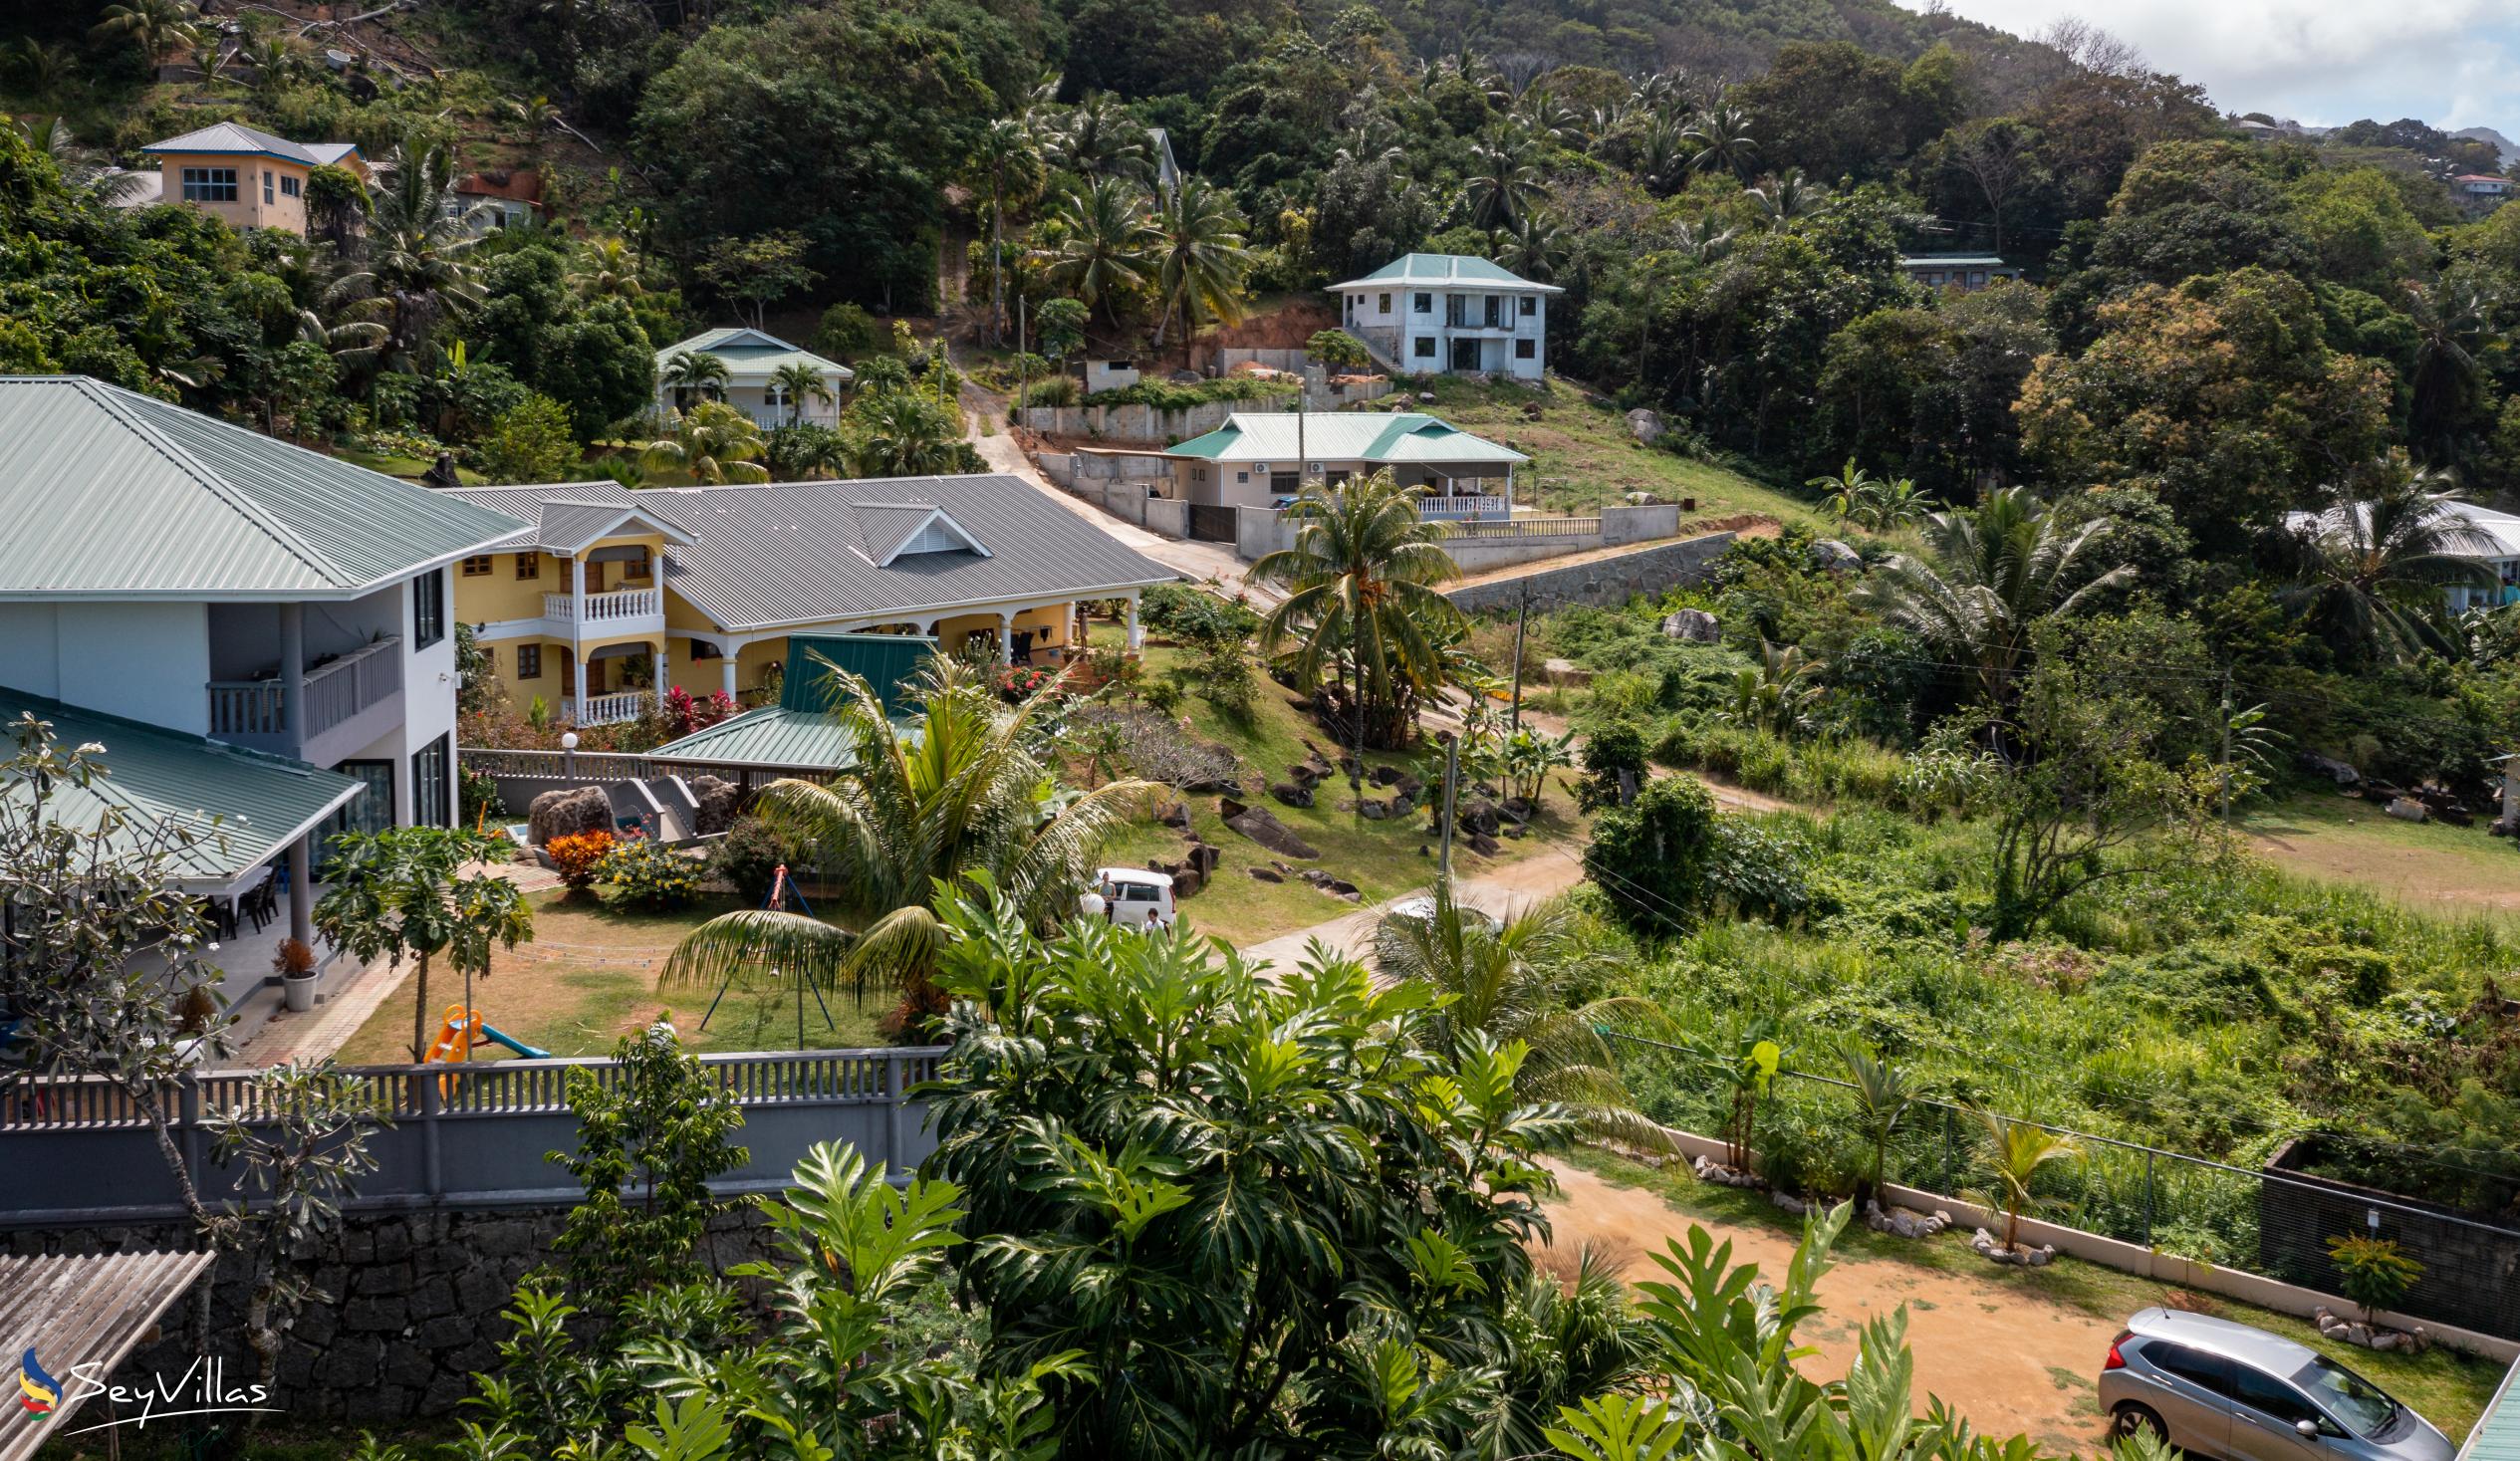 Foto 21: Farida Apartments - Location - Mahé (Seychelles)